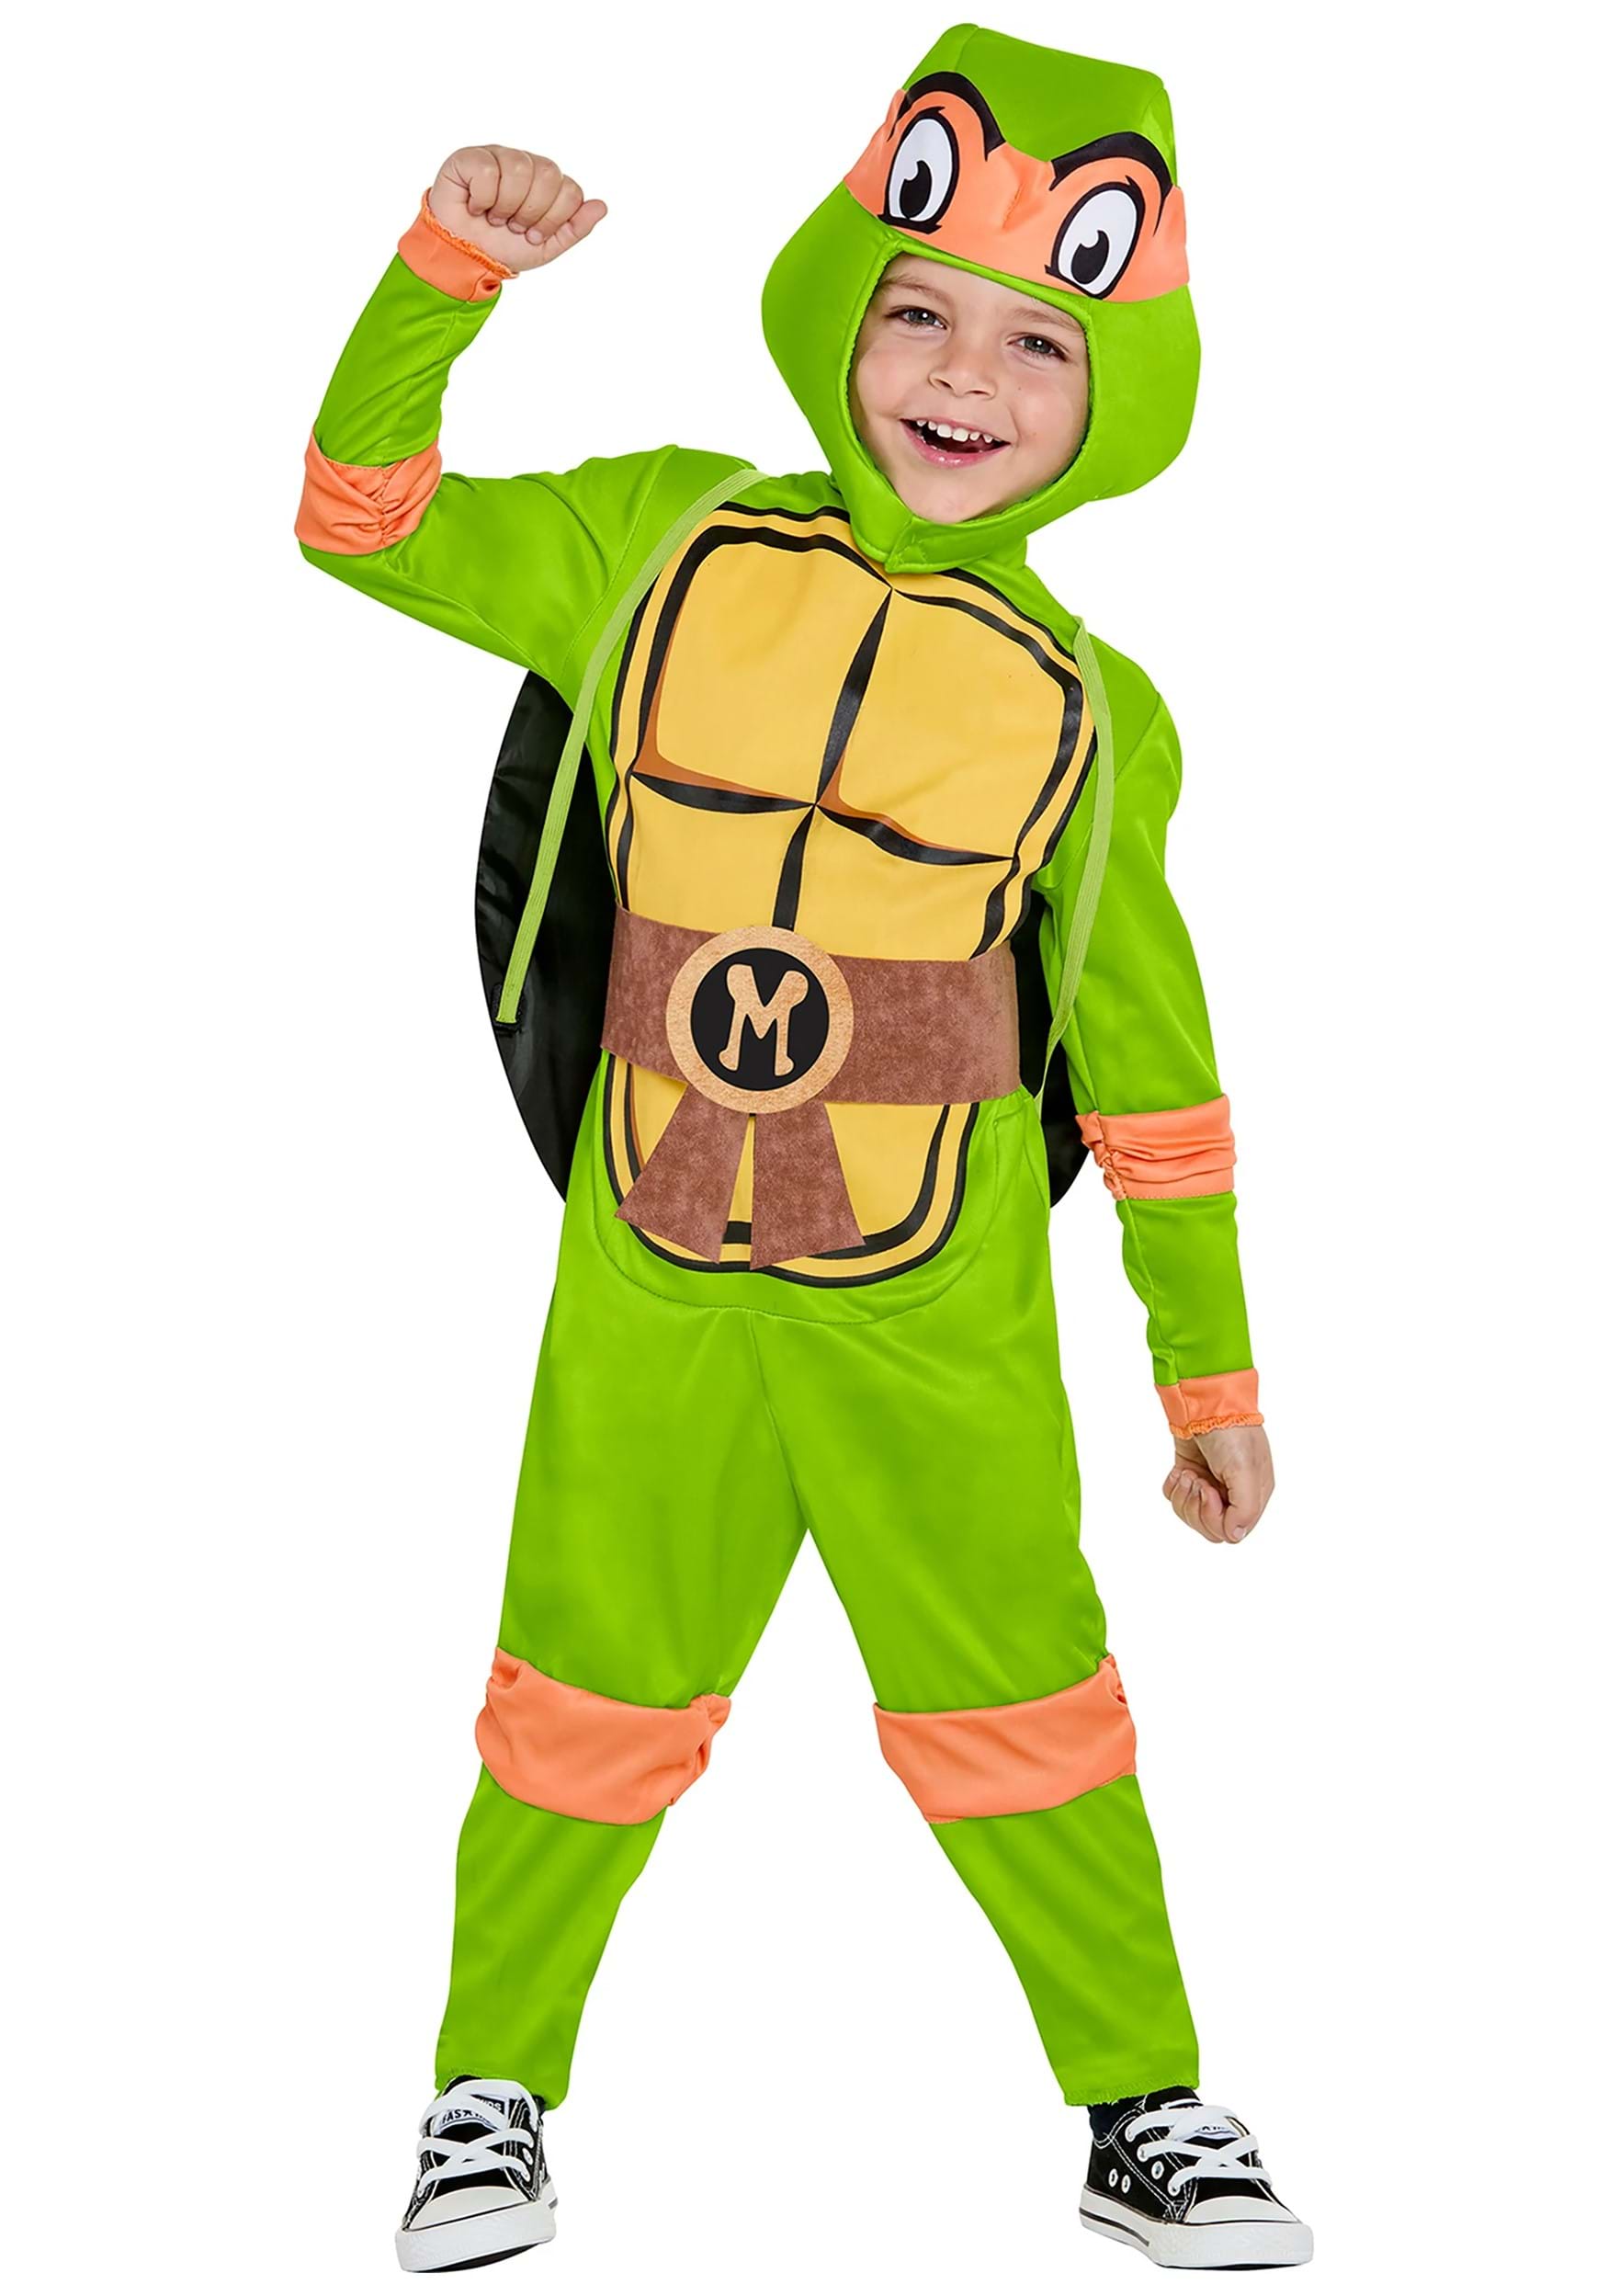 Ninja Kids Tee- Dress Your Ninja Kid in Cool Gear! Size 10-12